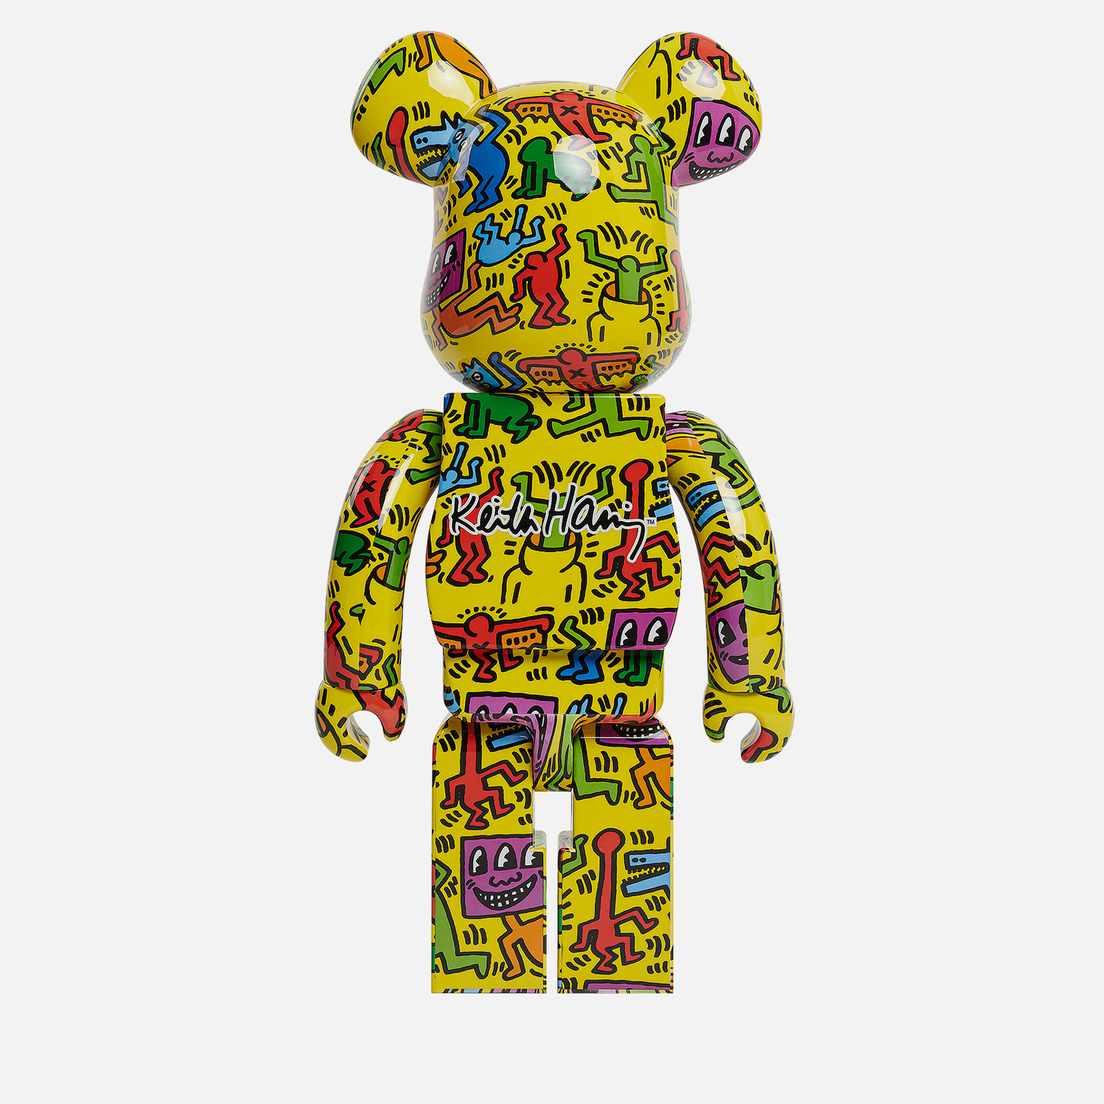 Medicom Toy Игрушка Bearbrick Keith Haring Ver. 5 1000%